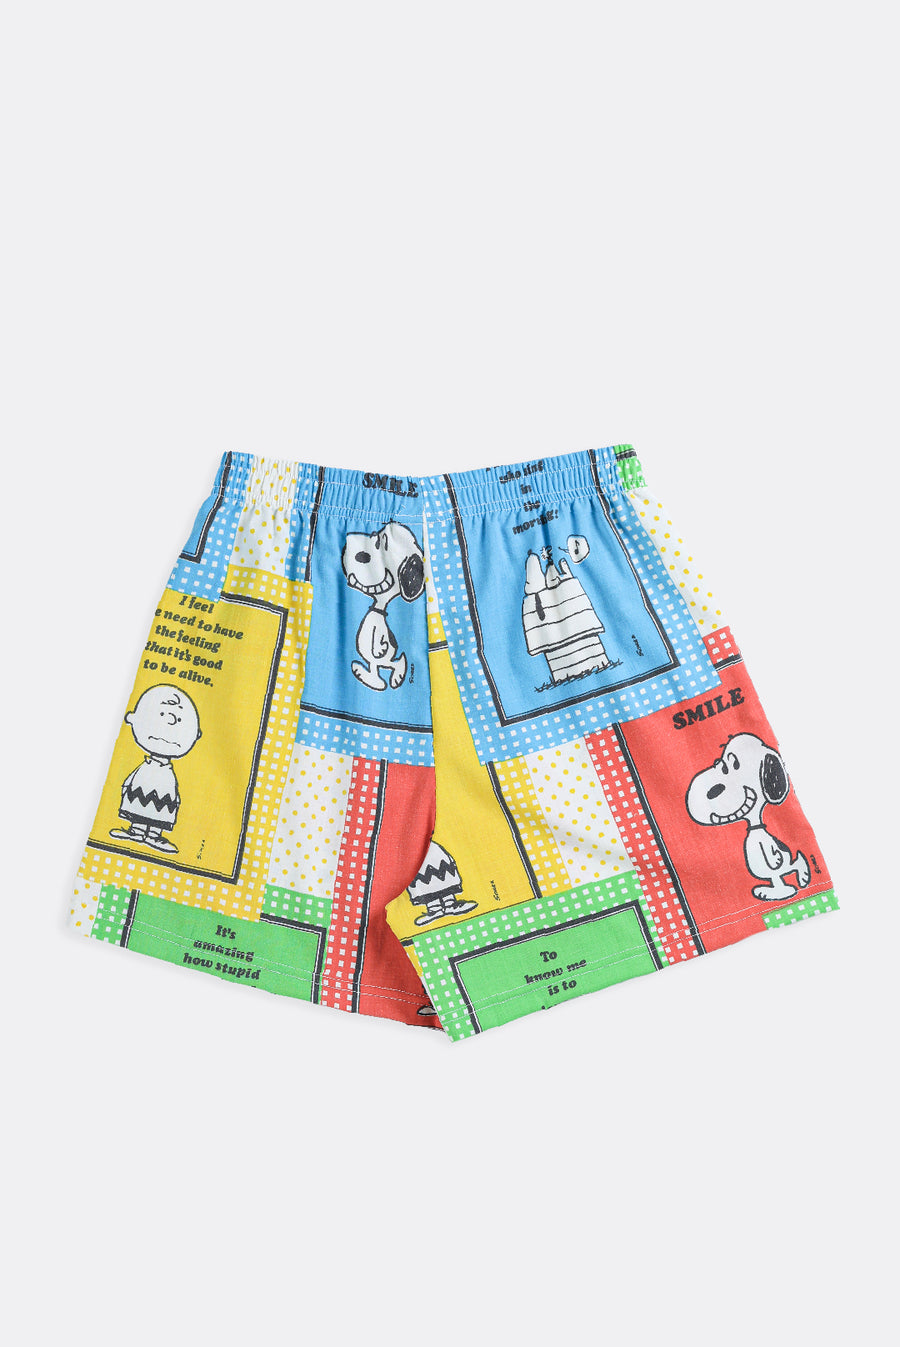 Unisex Rework Charlie Brown Boxer Shorts- S, M, L